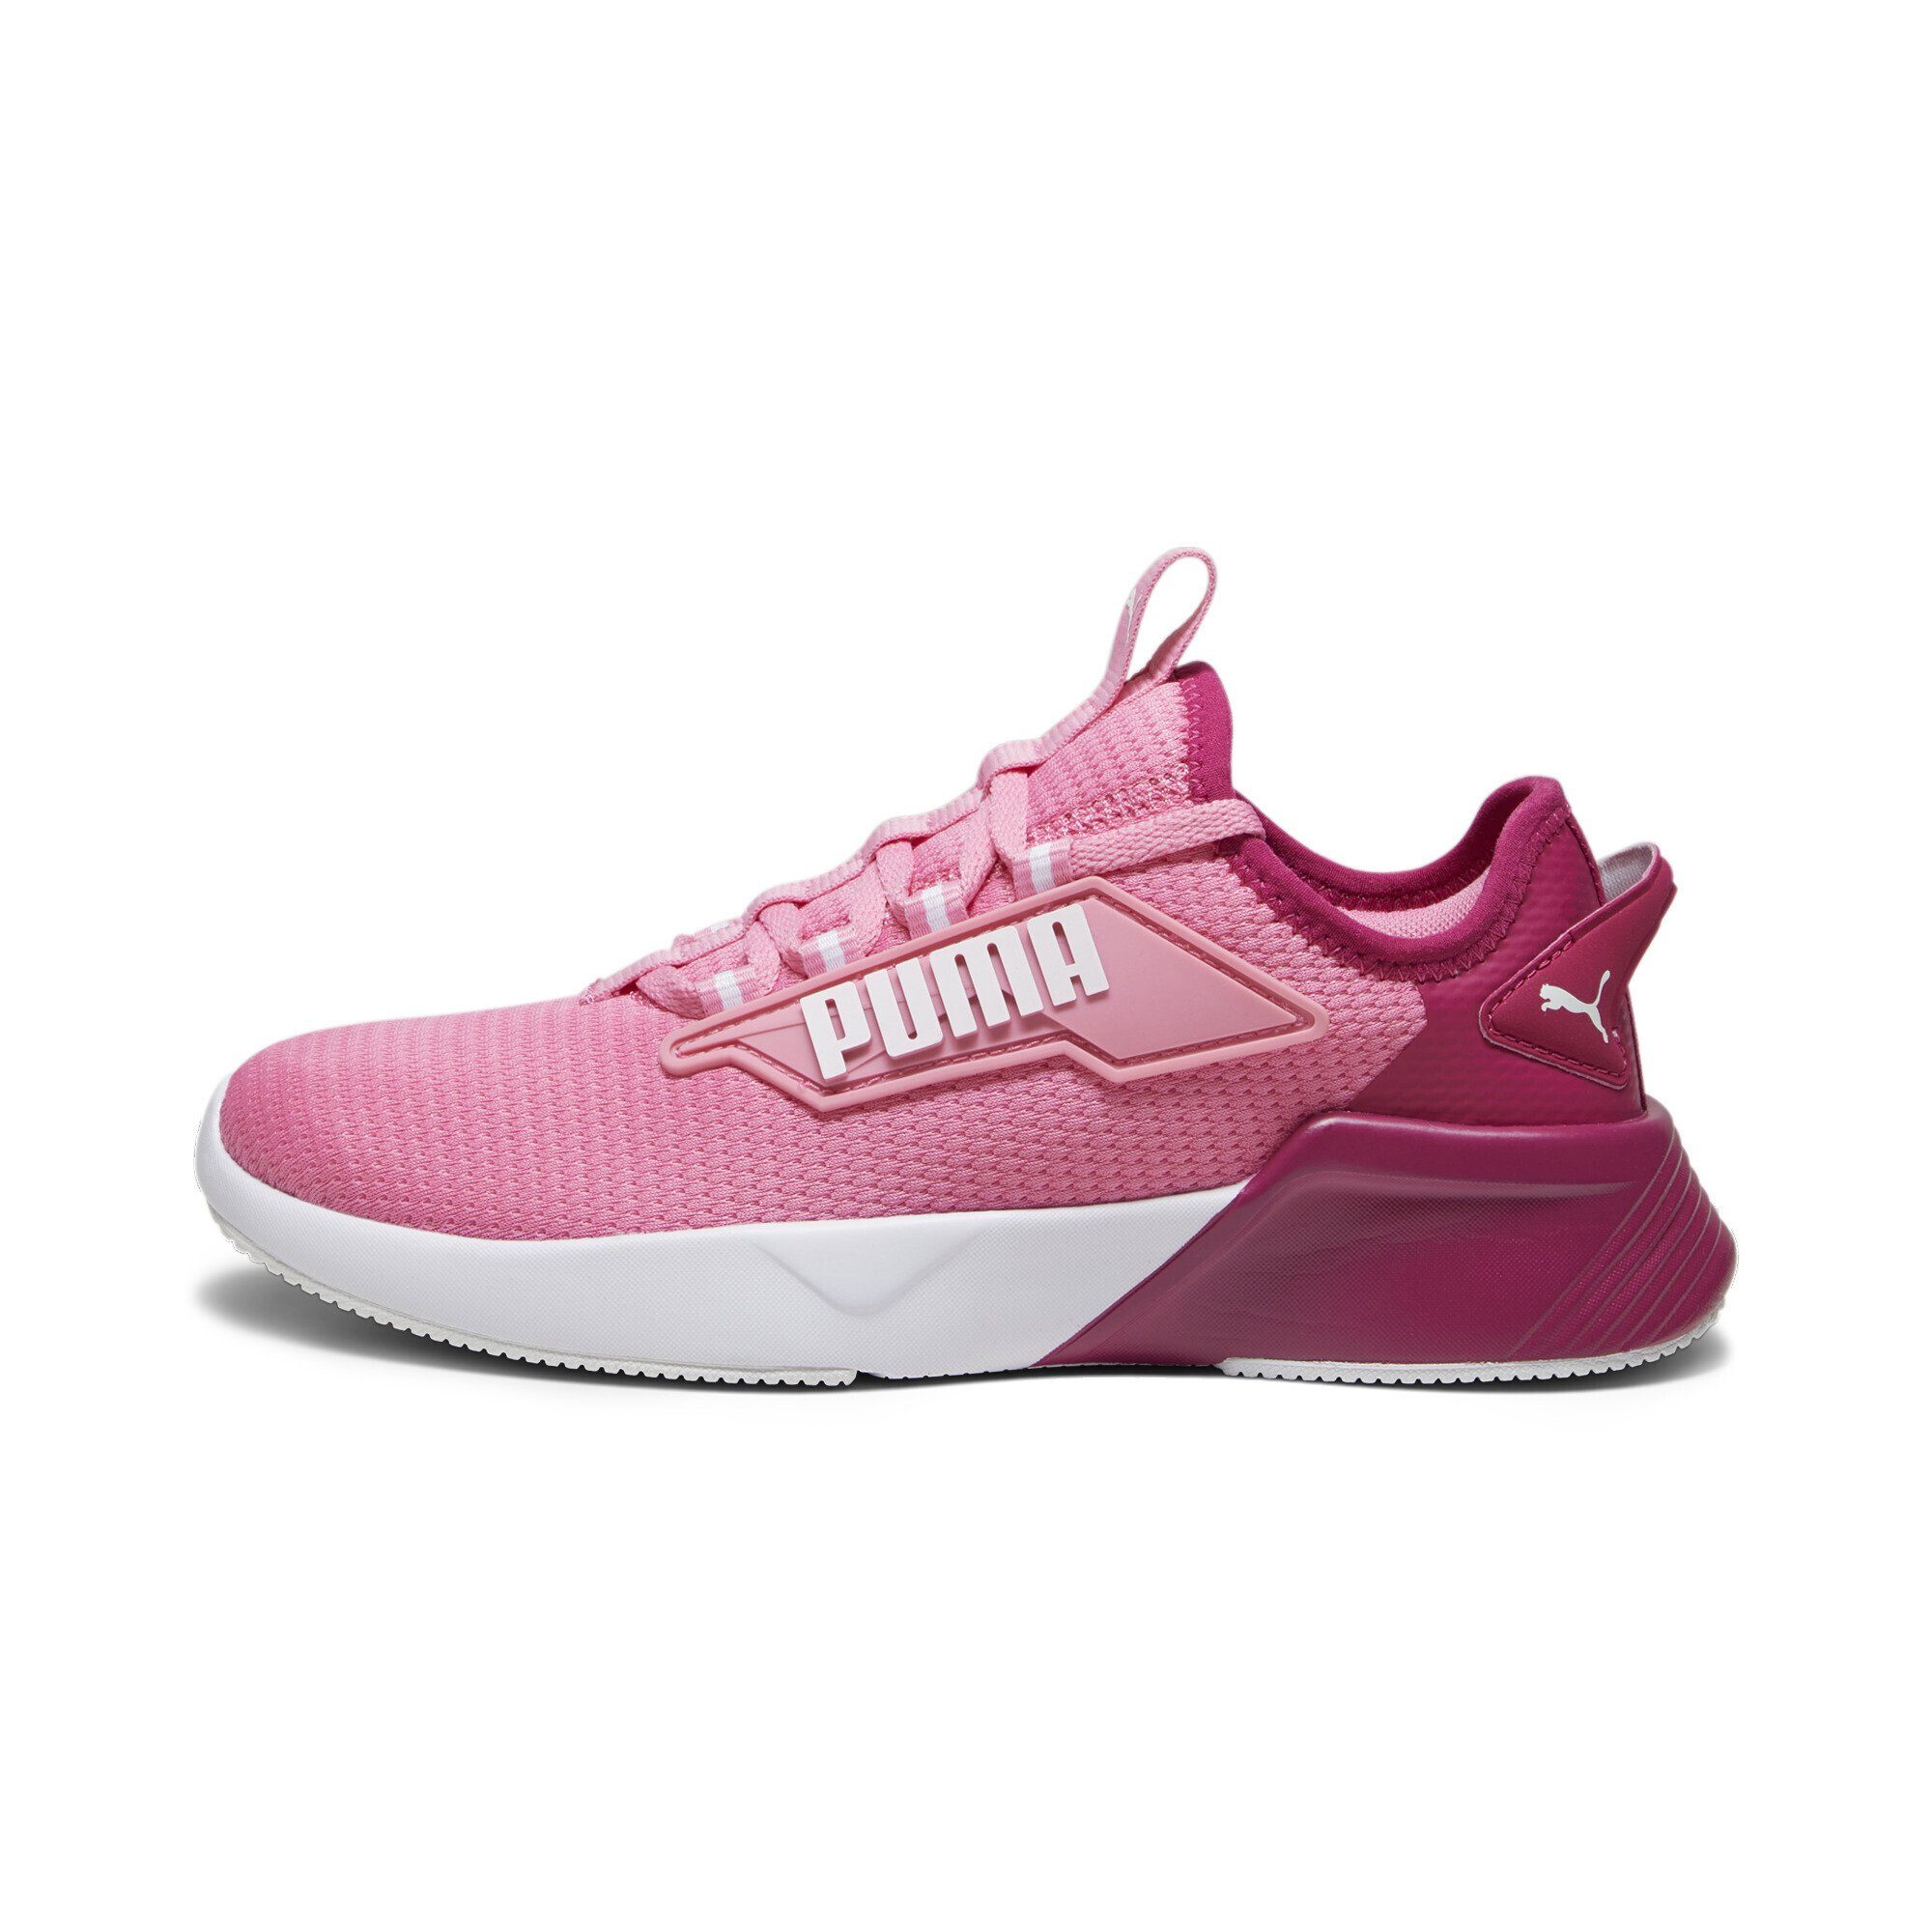 Sneakers Burst Pinktastic PUMA White Pink Strawberry Laufschuh Jugendliche 2 Retaliate